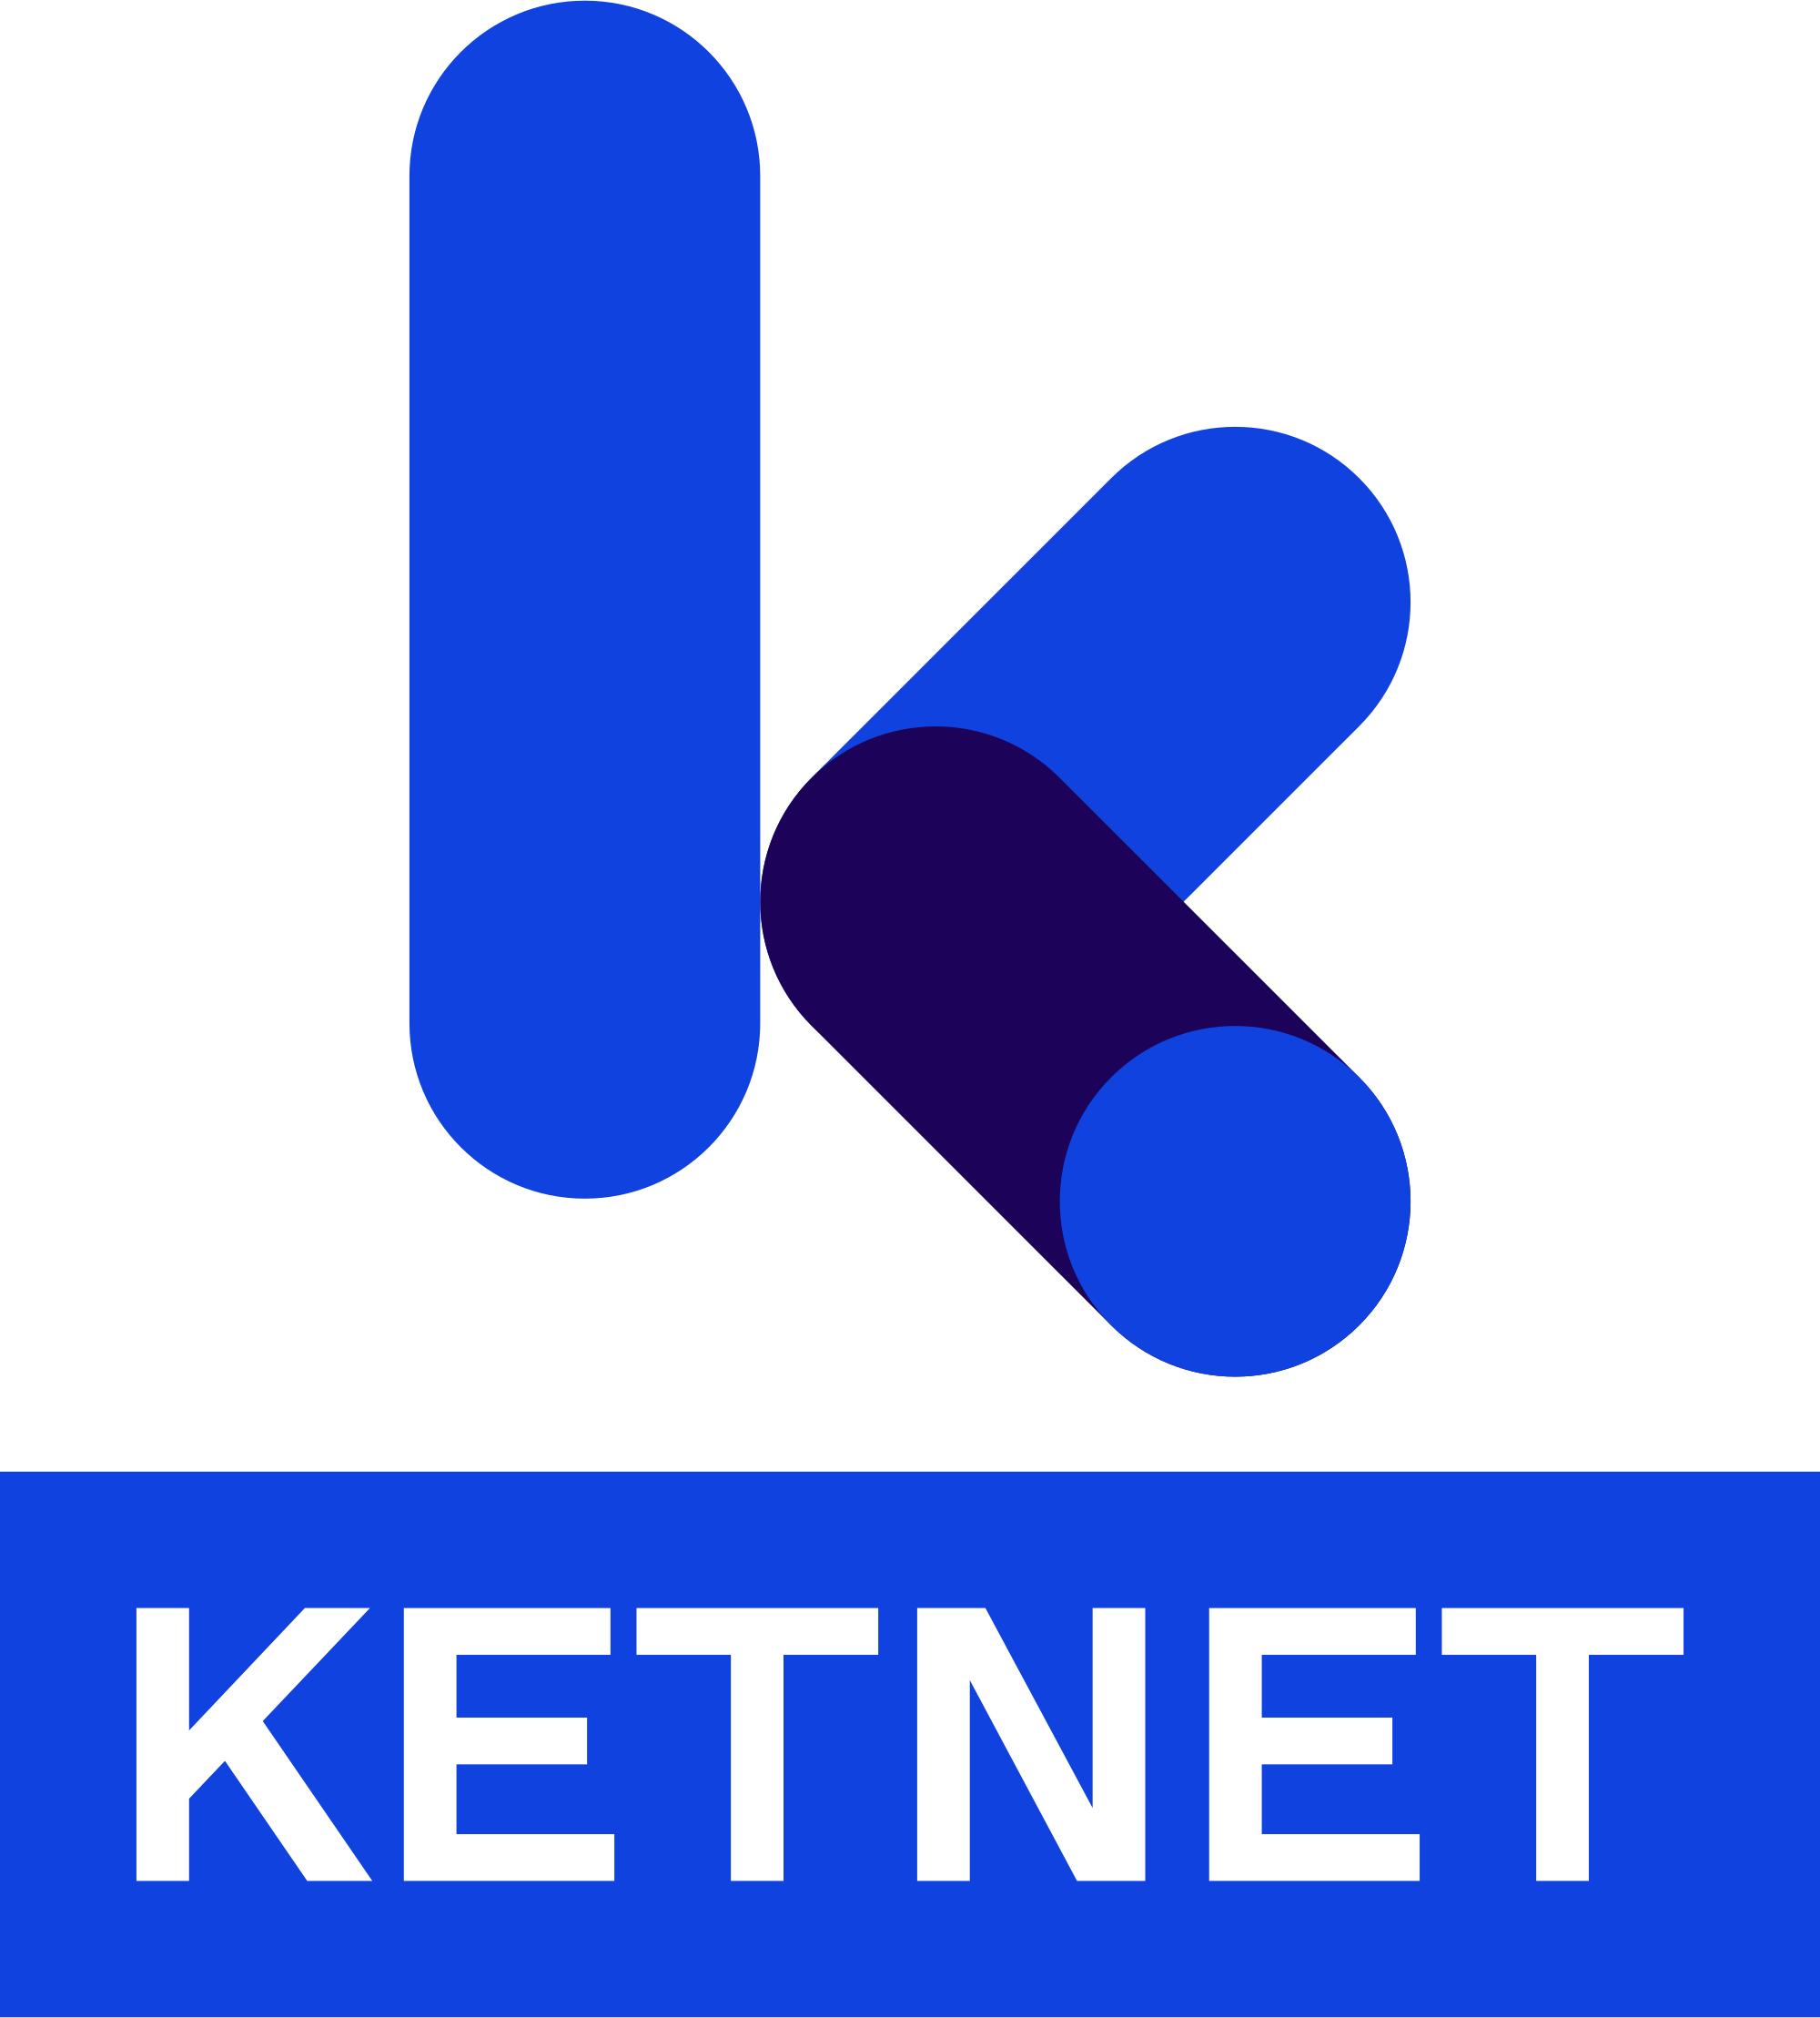 Ketnet - network